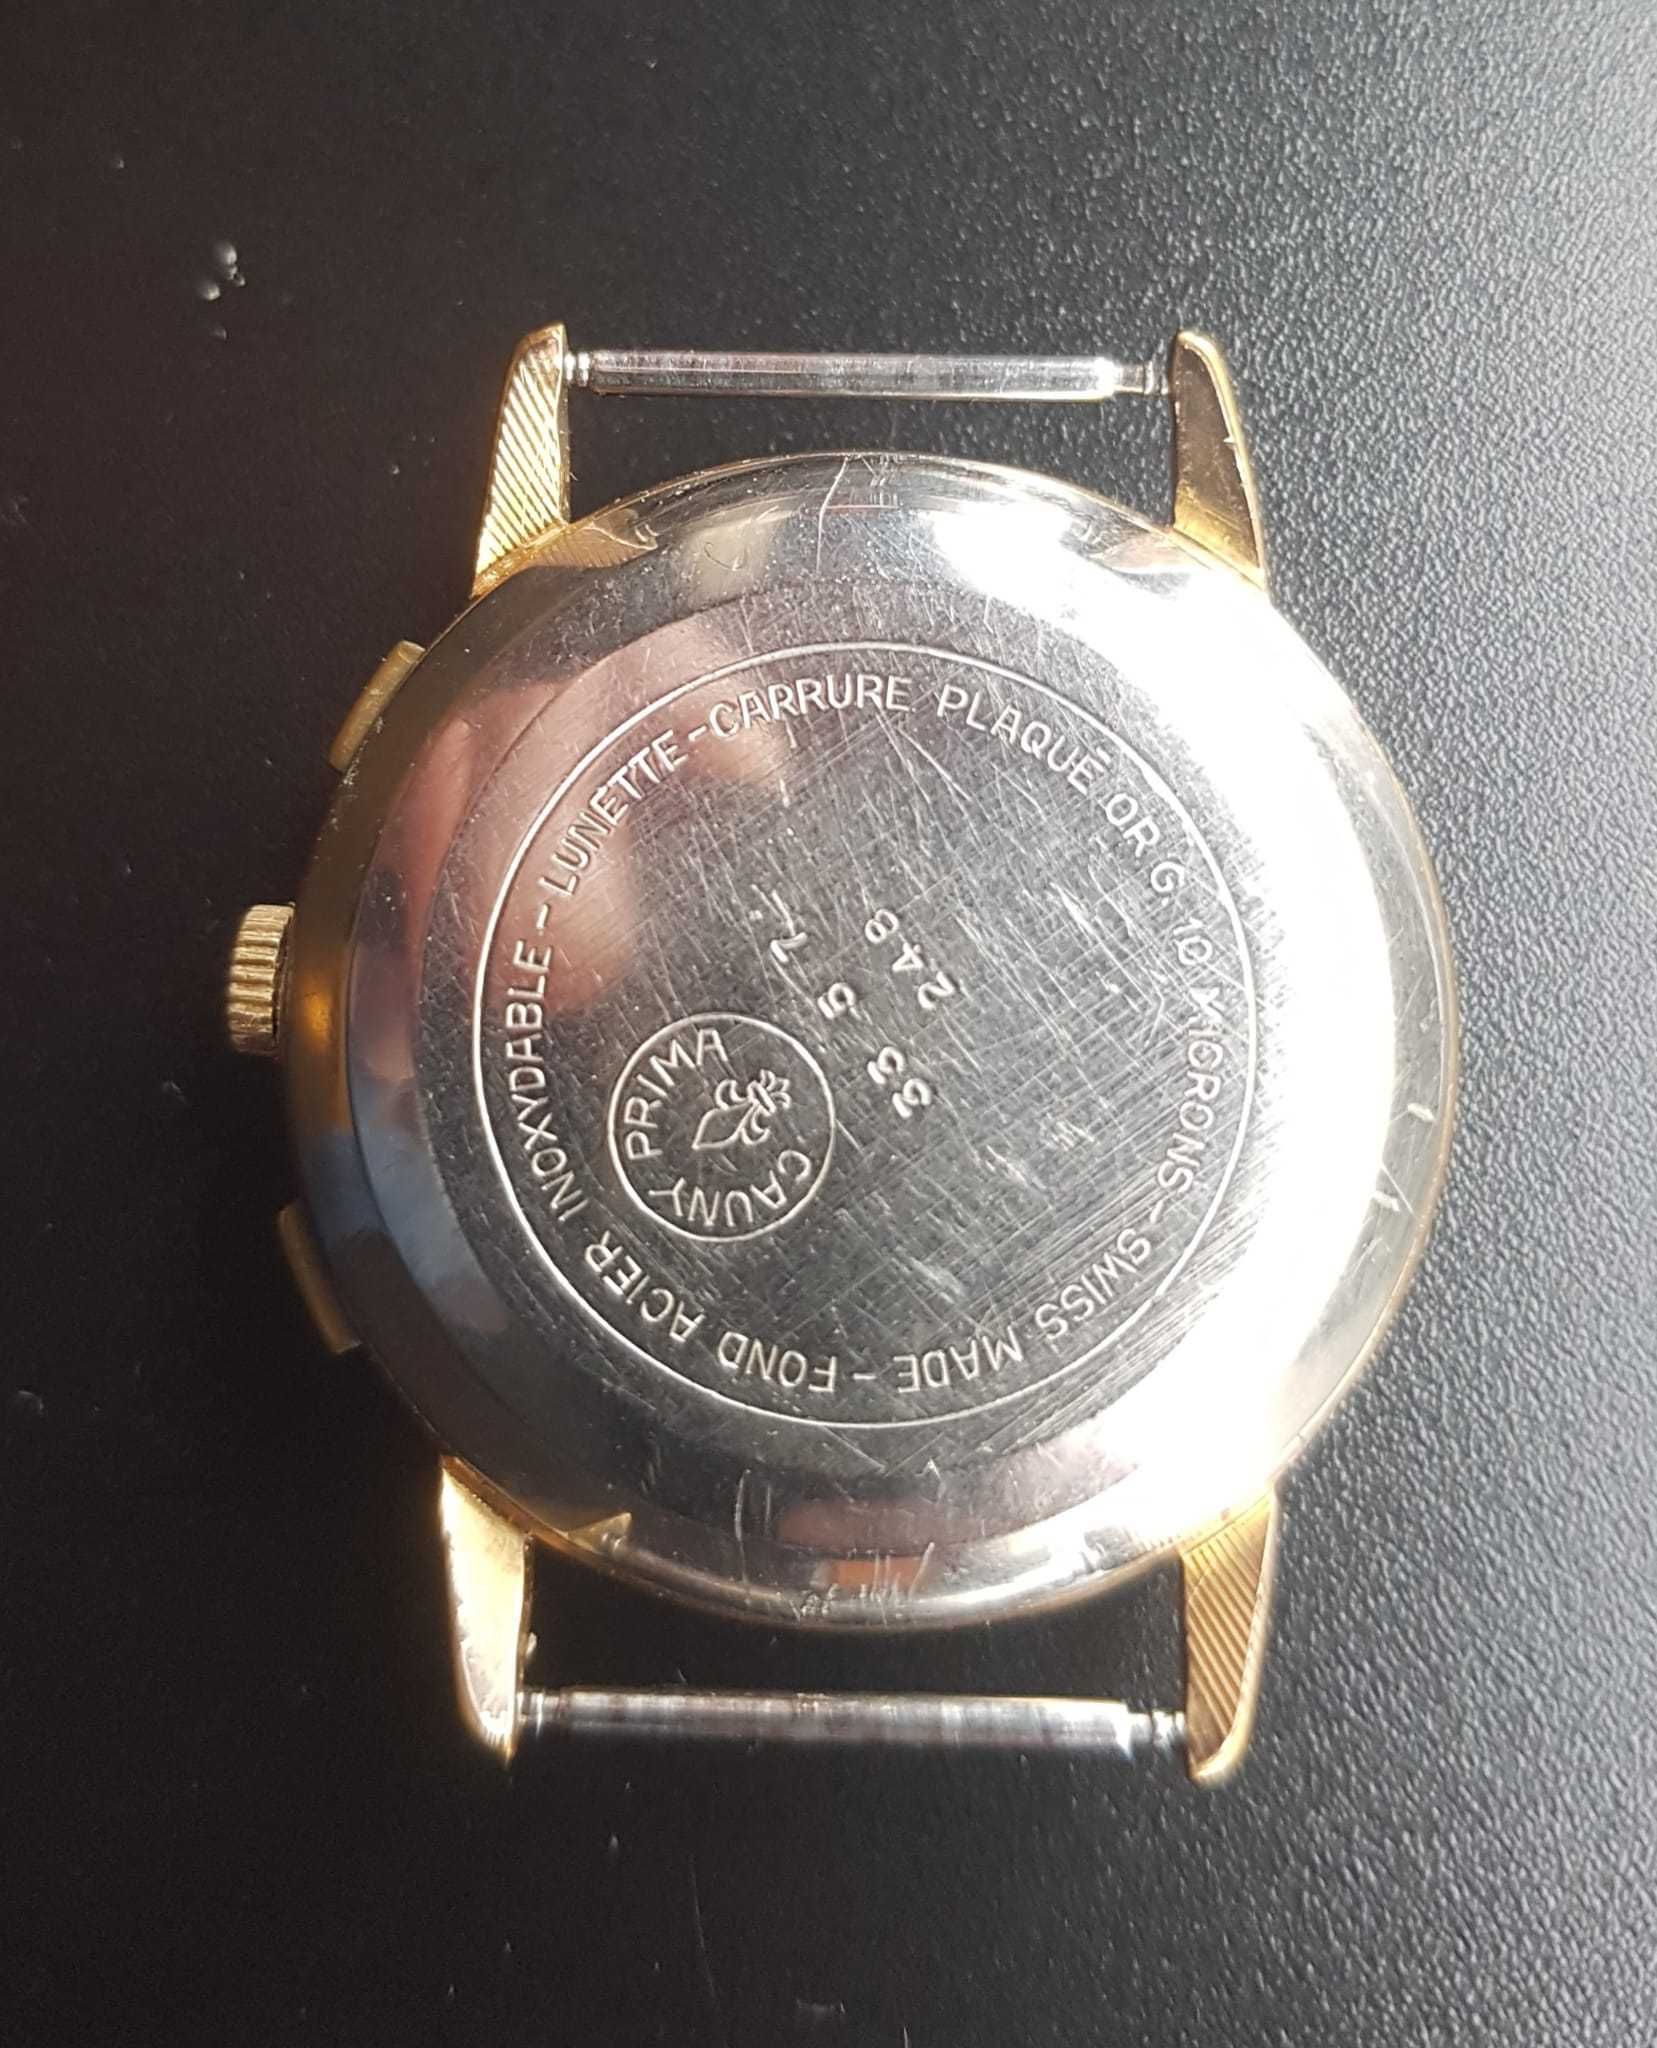 Cauny cronografo Landeron anos 60